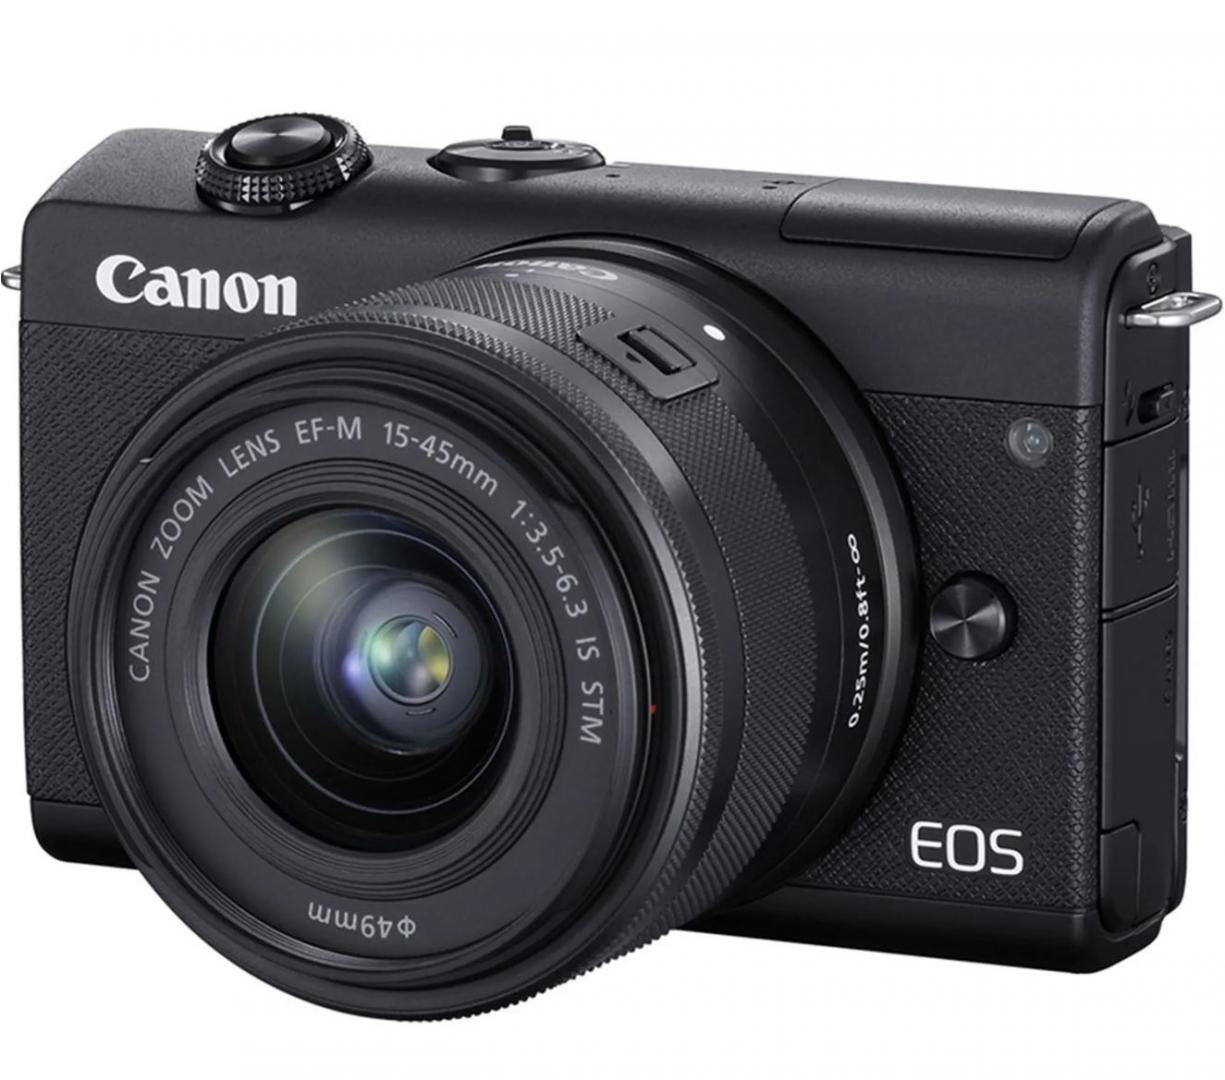 Camera foto mirrorless Canon EOS M200 kit EF-M 15-45mm f/3.5-6.3 IS STM, Negru, senzor APS-C 24.1 MP, crop factor 1.6x, procesor DIGIC 8, touchscreen 3" LCD rabatabil, WiFi,micro USB, Bluetooth,ISO 100-25600, filmare 4K - 3840 x 2160 (23.98, 25 fps), Full HD - 1920 x 1080 (59.94, 50, 29.97, 25fps)